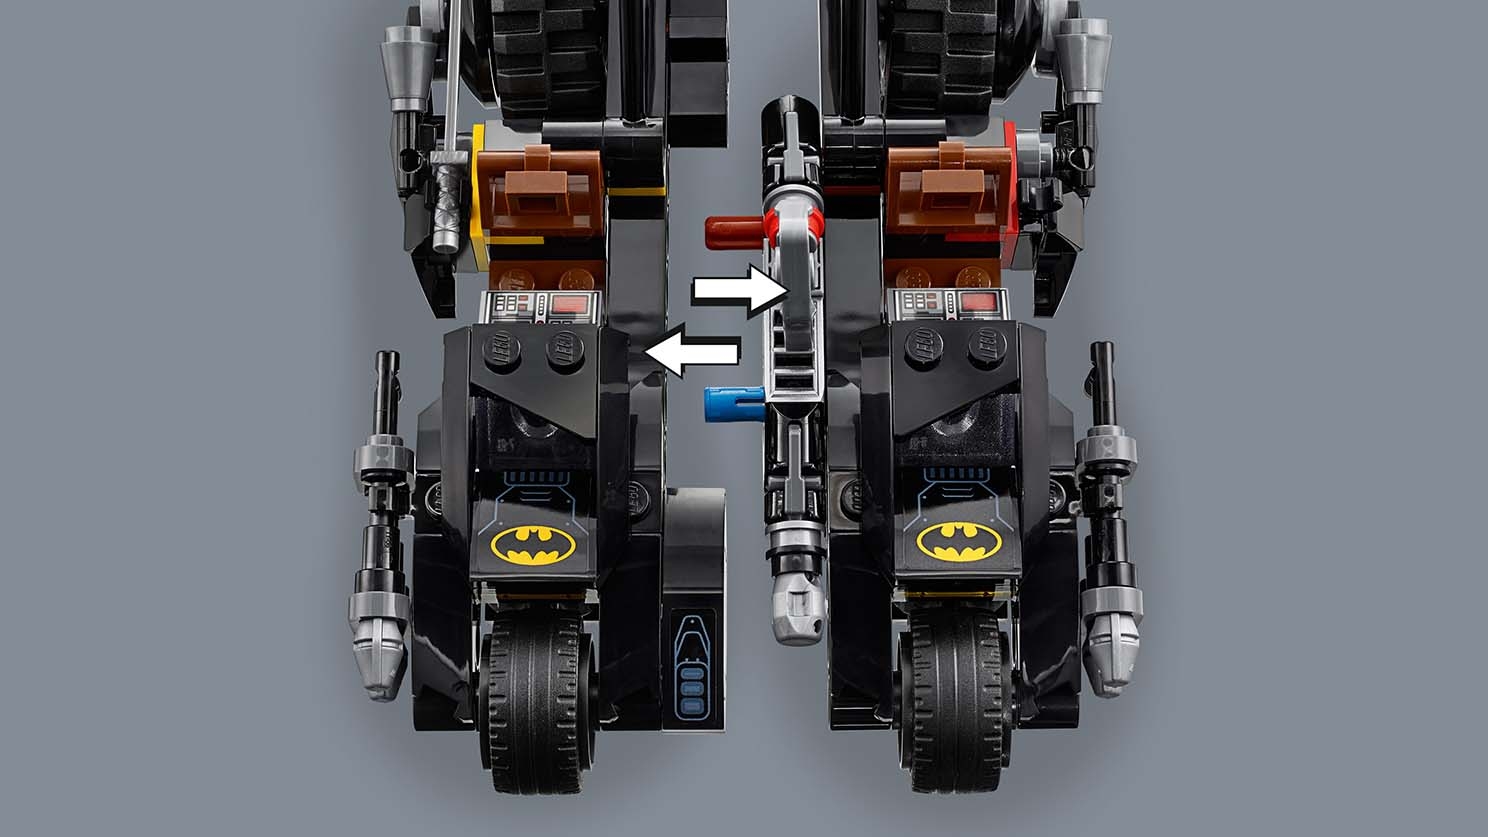 Mr. Freeze™ Batcycle™ Battle 76118, Batman™